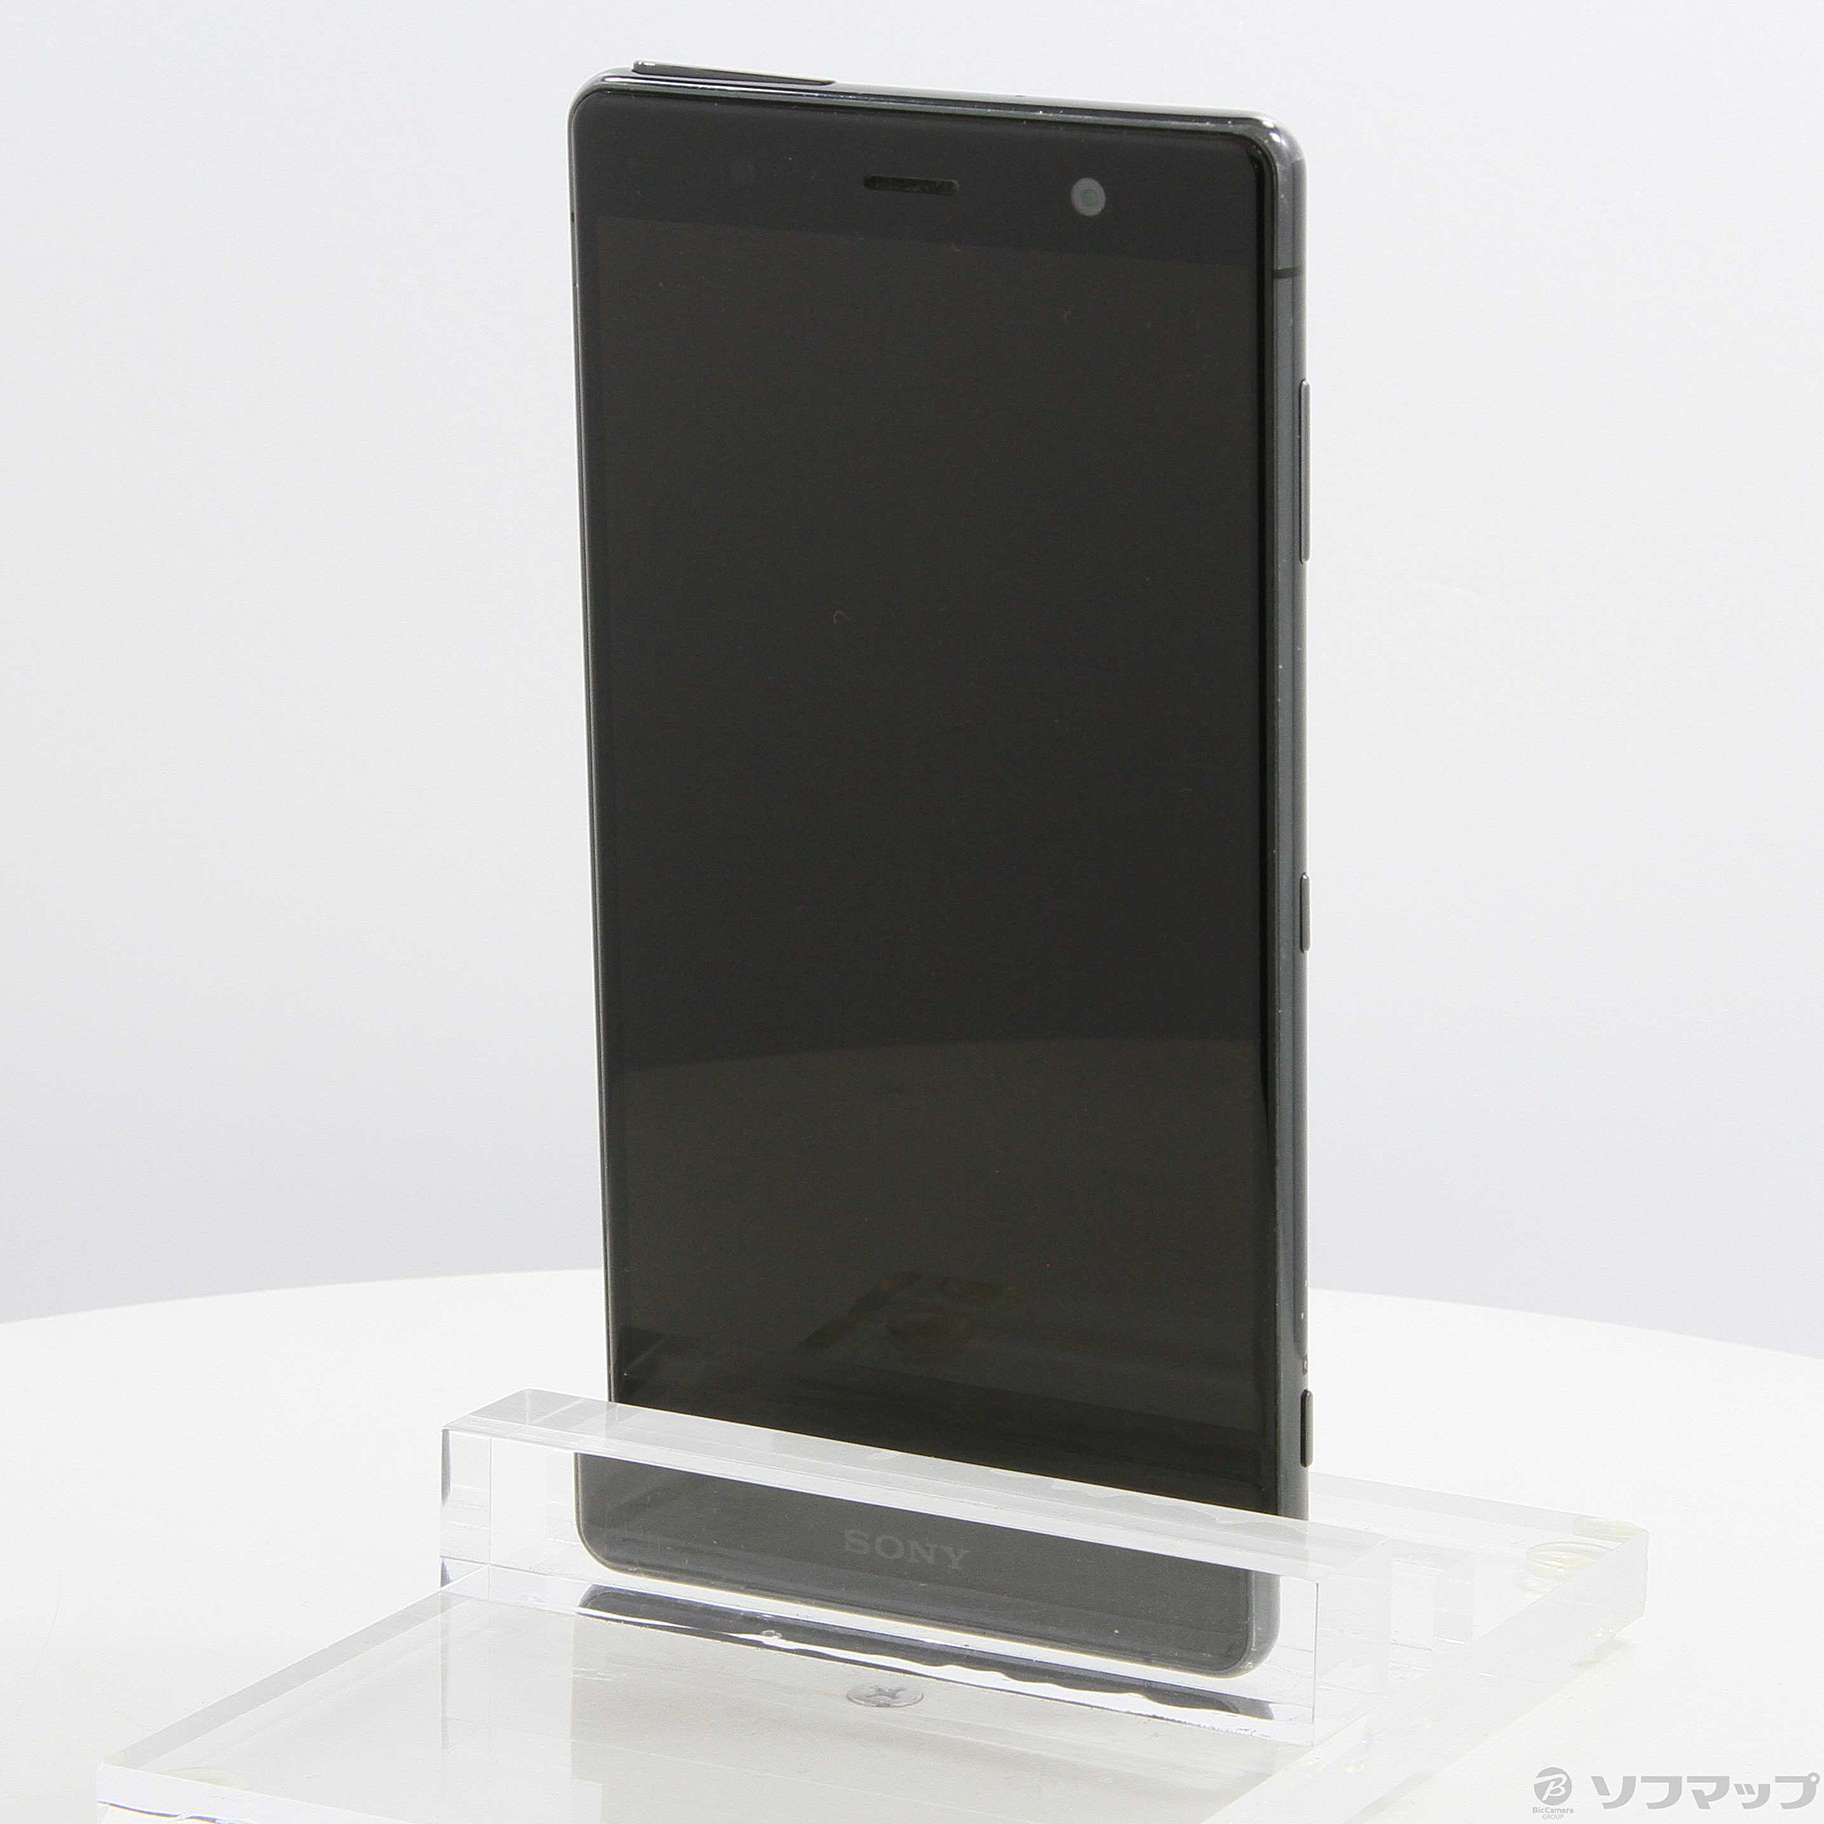 Xperia XZ2 Premium クロムブラック 64 GB SIMフリー - スマートフォン本体